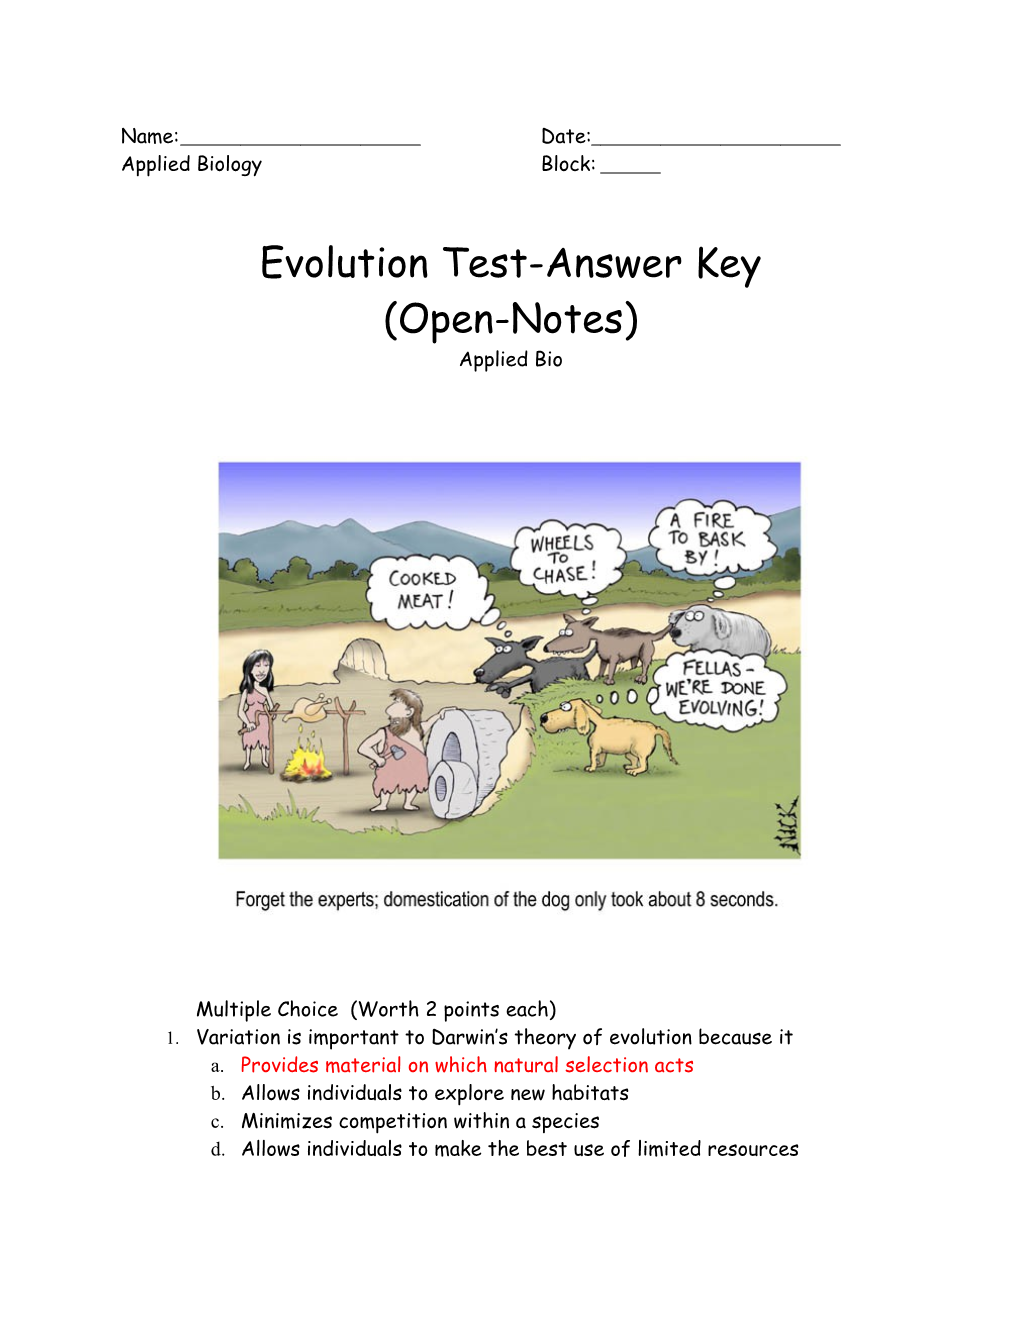 Evolution Test-Answer Key